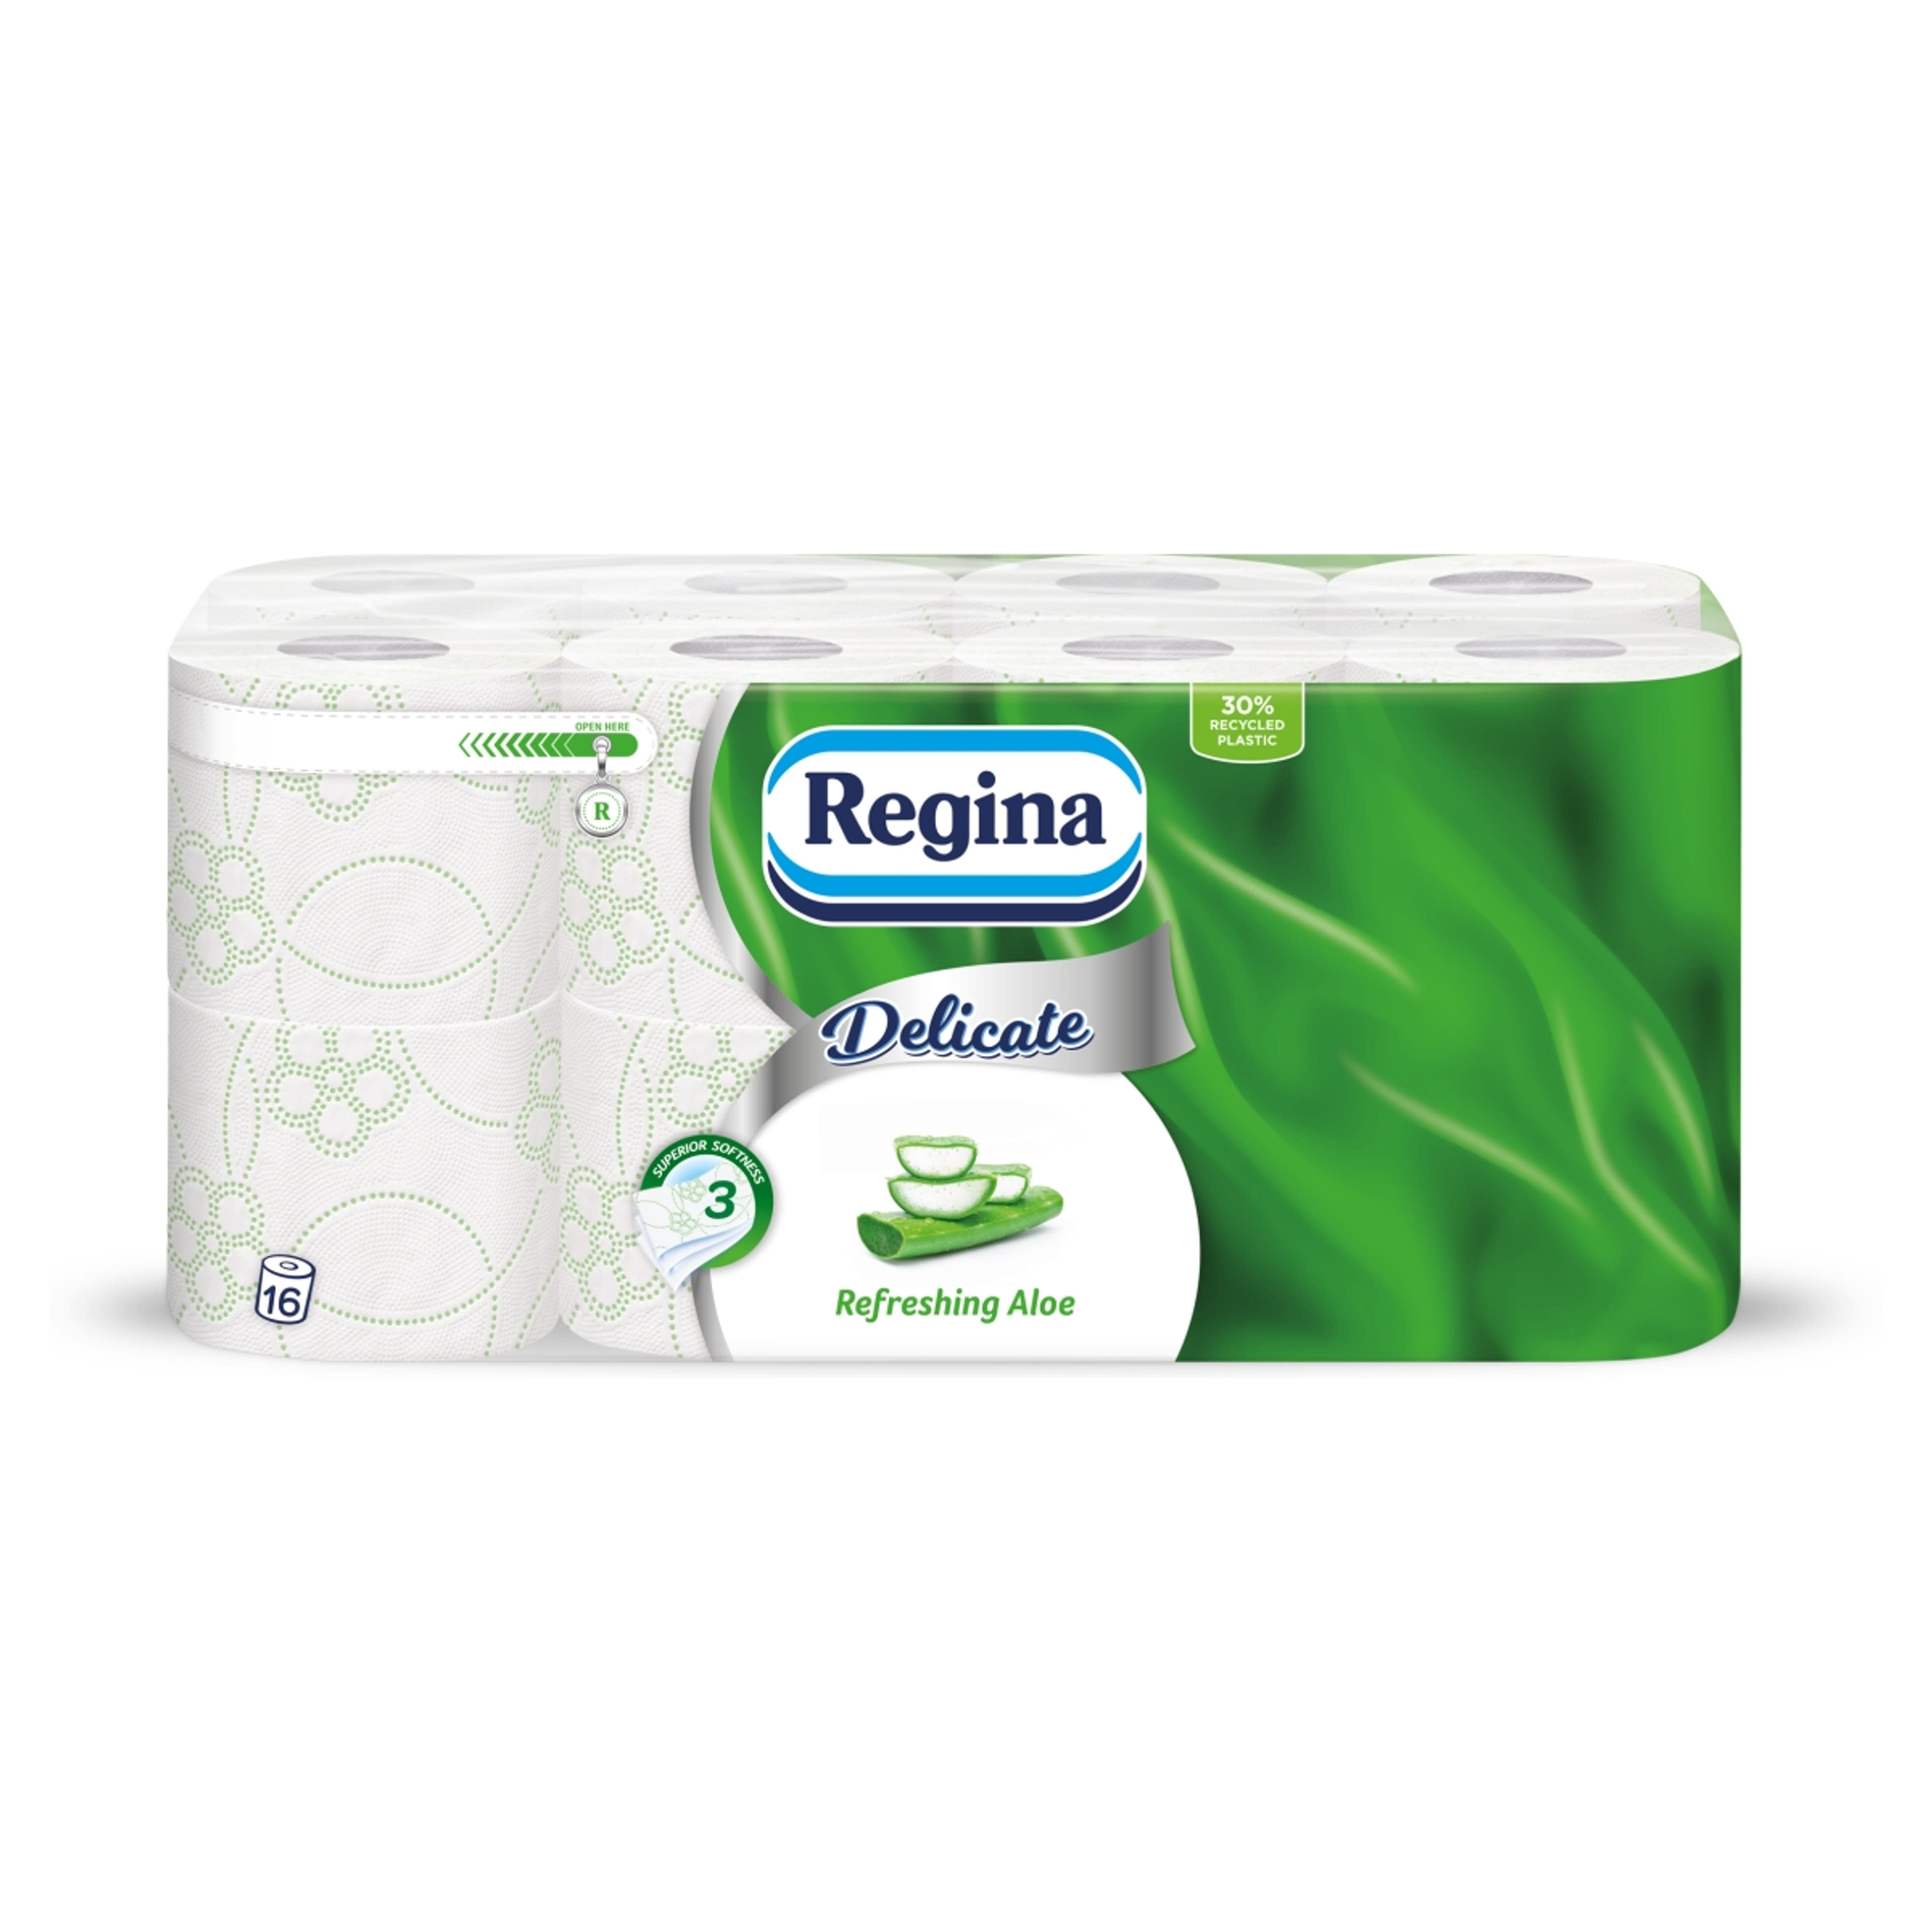 Regina Delicate Refreshing Aloe toalettpapír 3 rétegű - 16 db